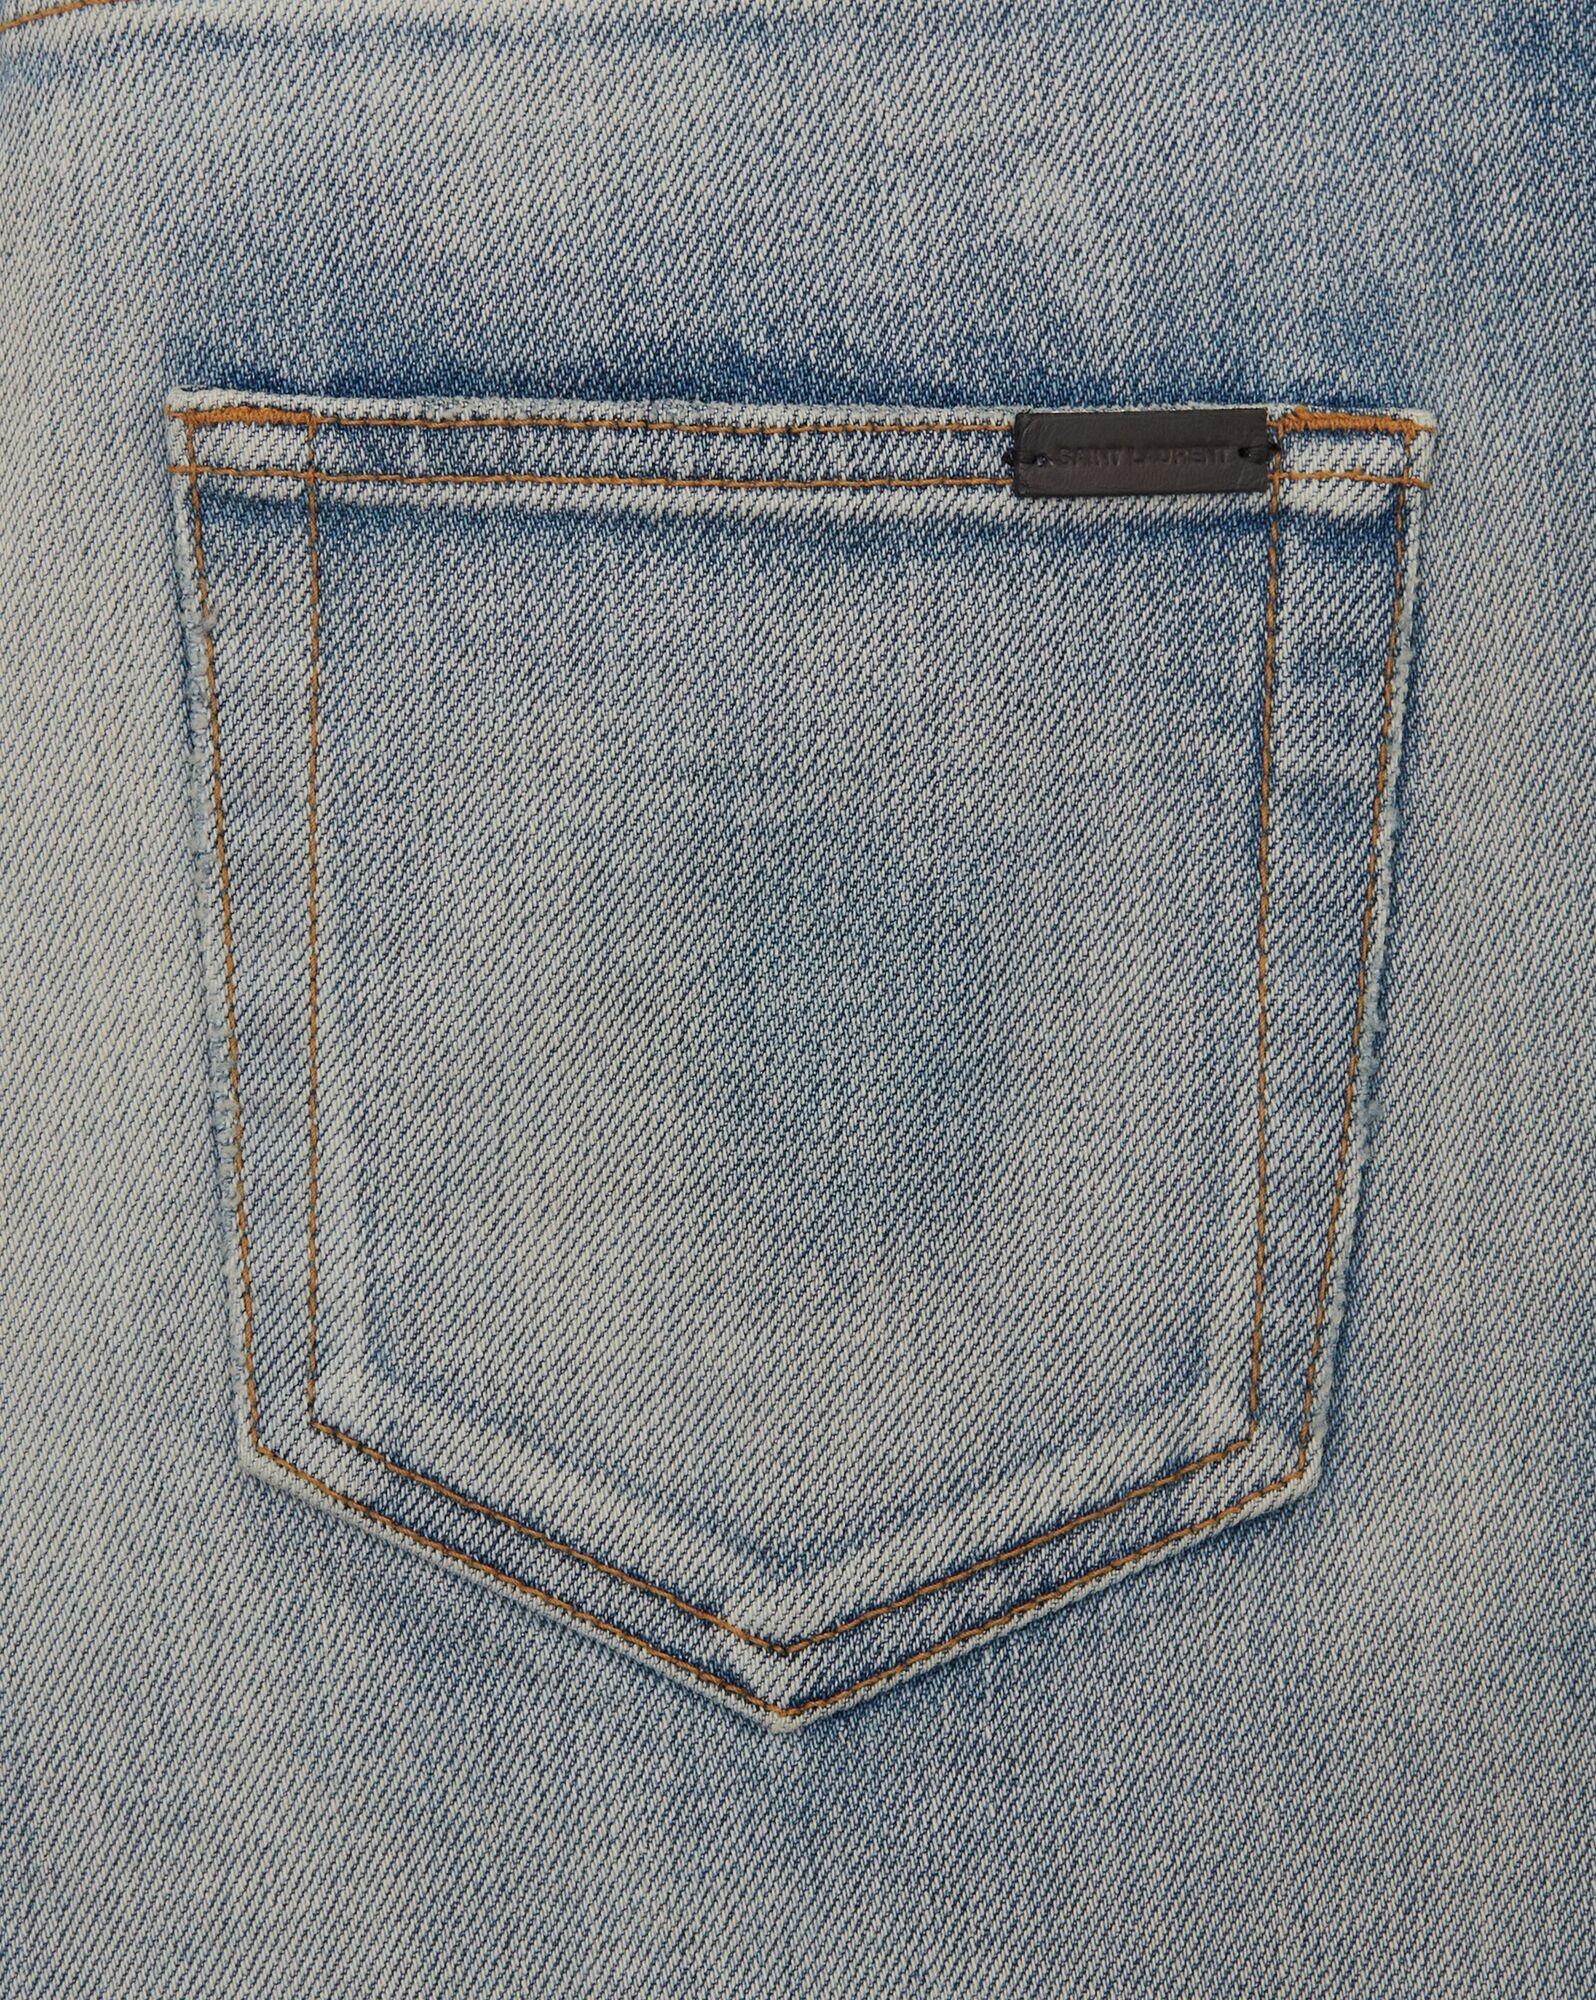 skinny-fit jeans in light fall blue denim - 4